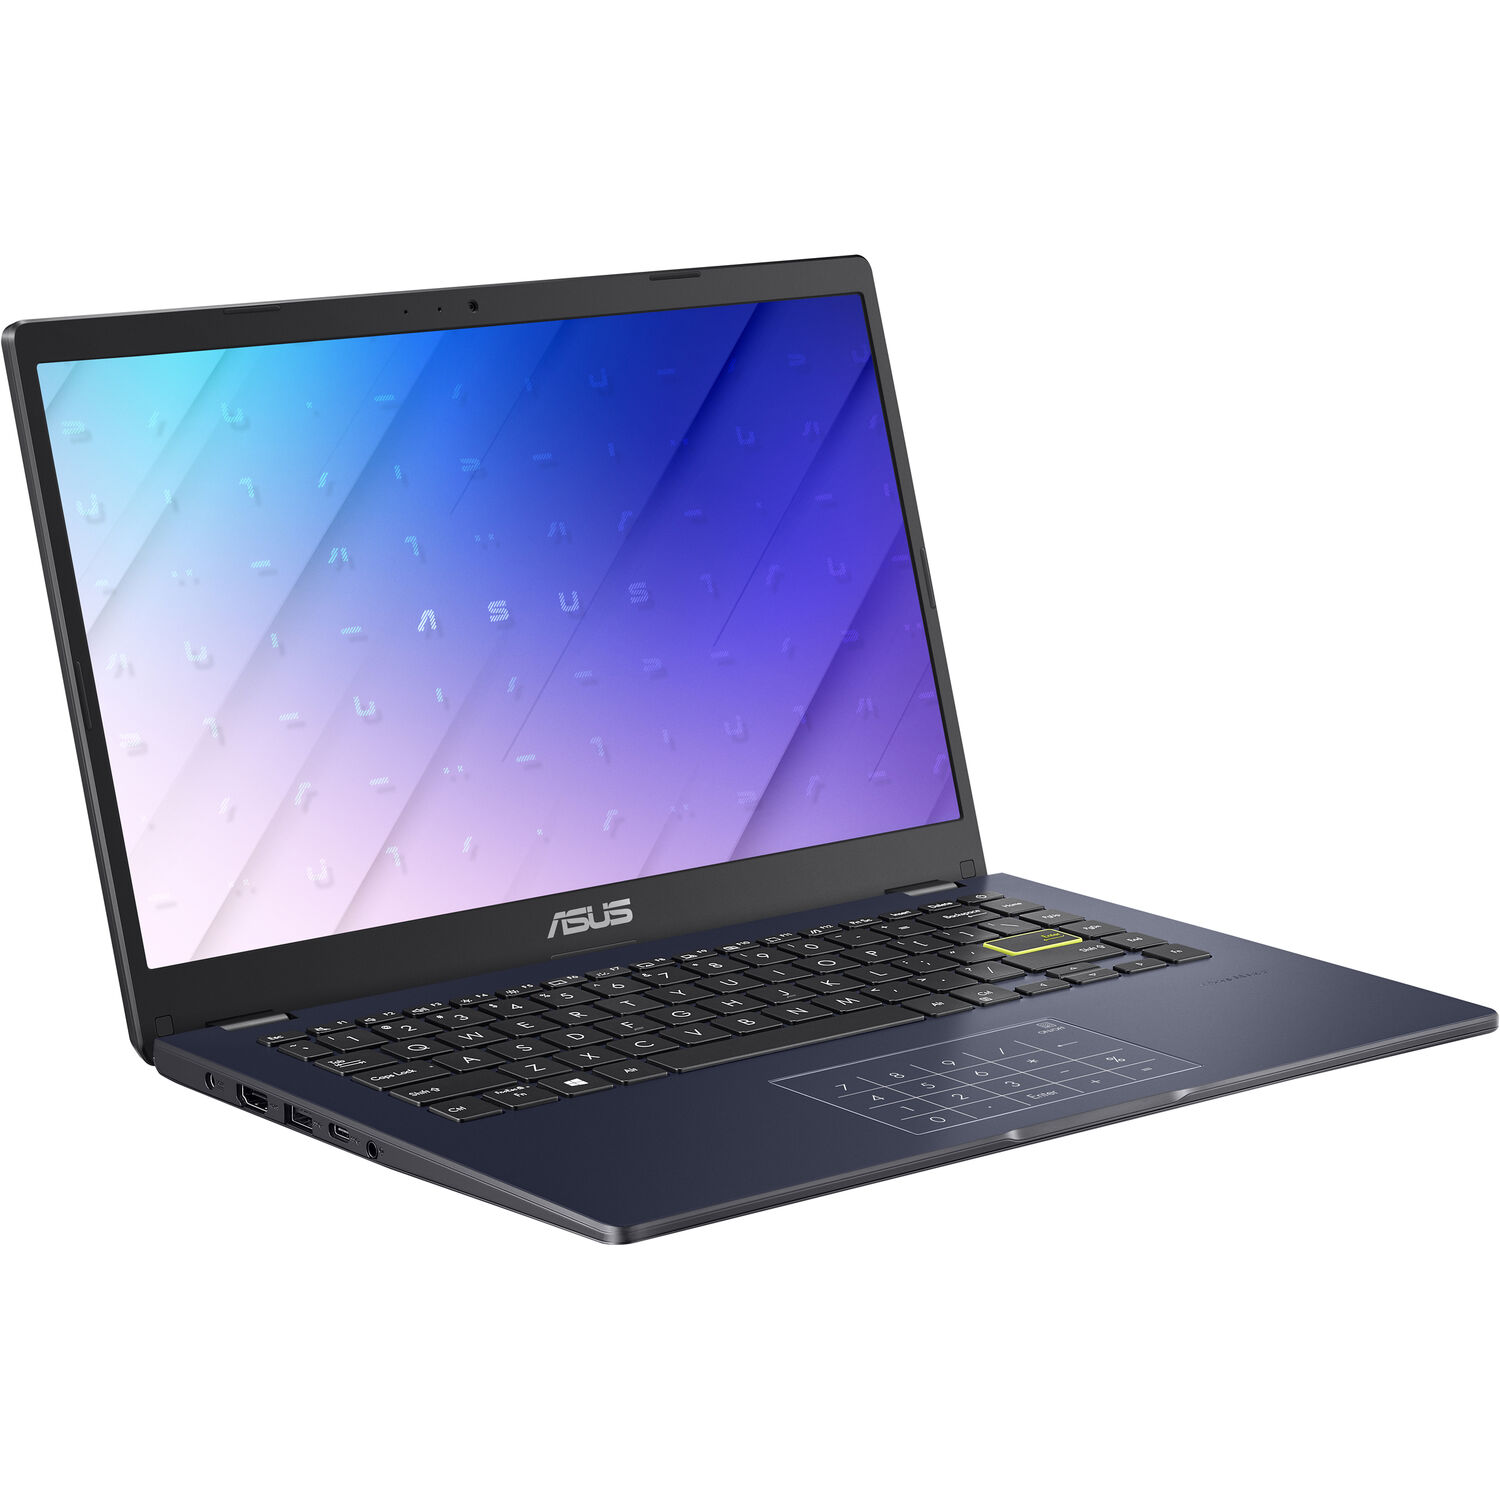 ASUS 14 L410 Everyday Value Laptop (Intel Celeron N4020 2-Core, 4GB RAM, 64GB SSD + 64GB eMMC, 14.0" Full HD (1920x1080), Intel UHD 600, Wifi, Bluetooth, Webcam, 1xUSB 3.2, 1xHDMI, Win 10 Home) - image 2 of 6